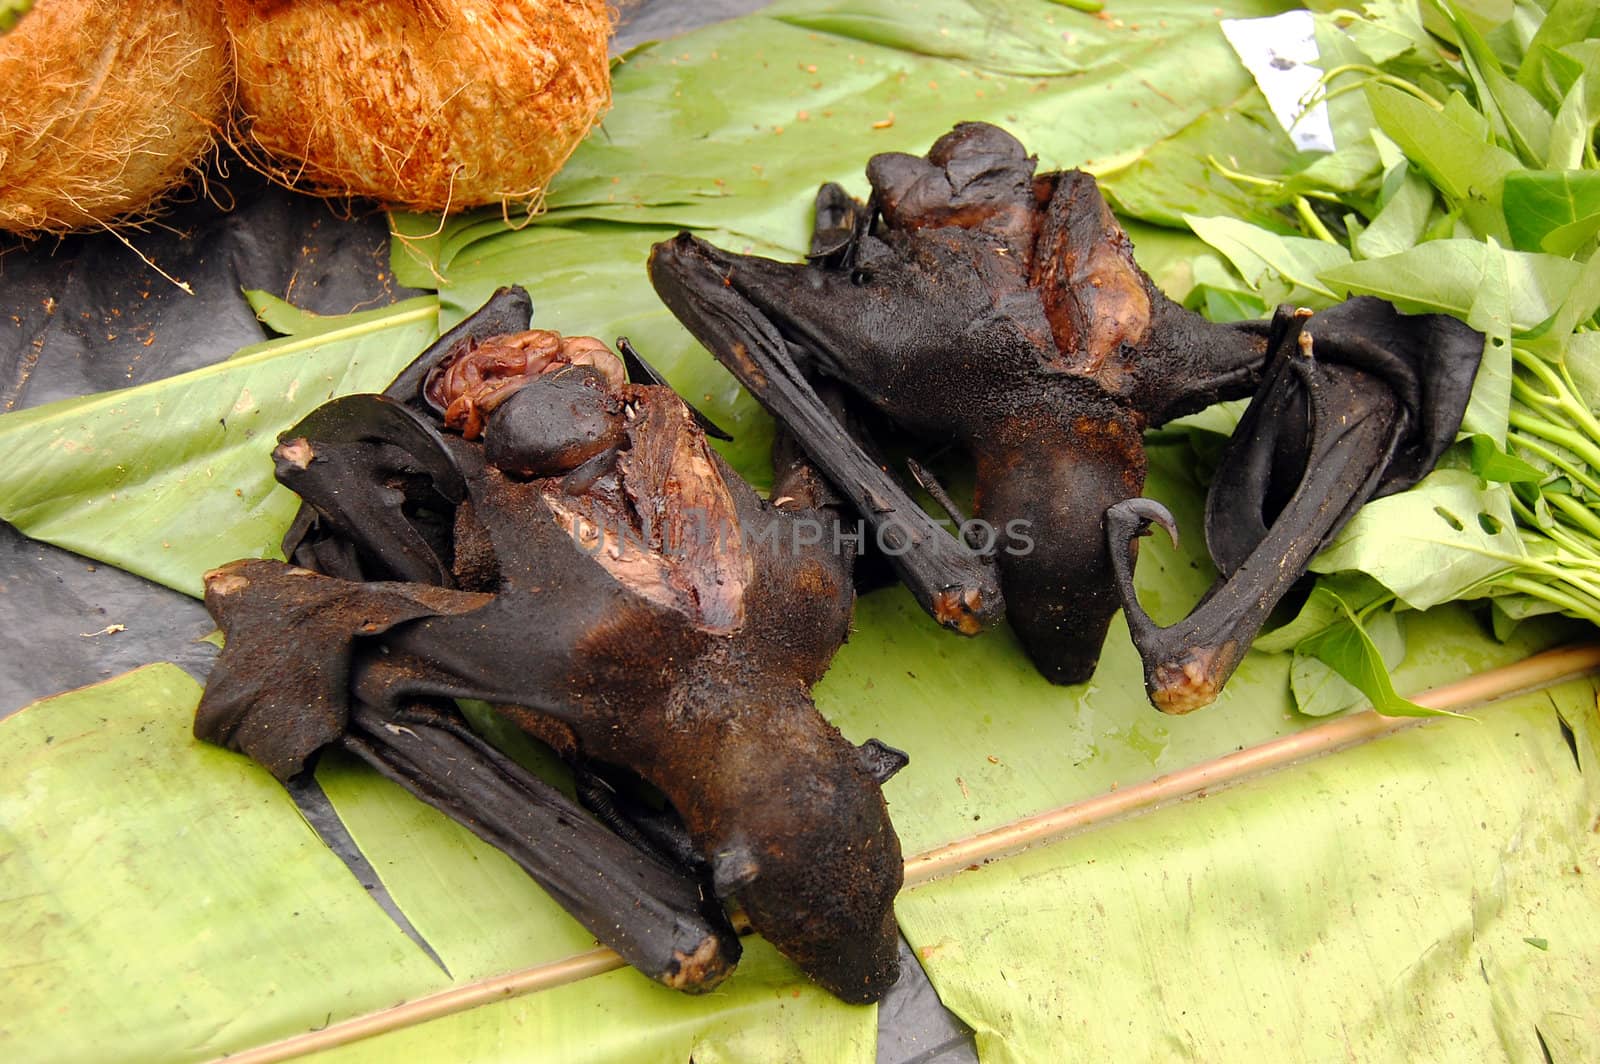 Fried rat at banana leaf, Wewak town, Papua New Guinea